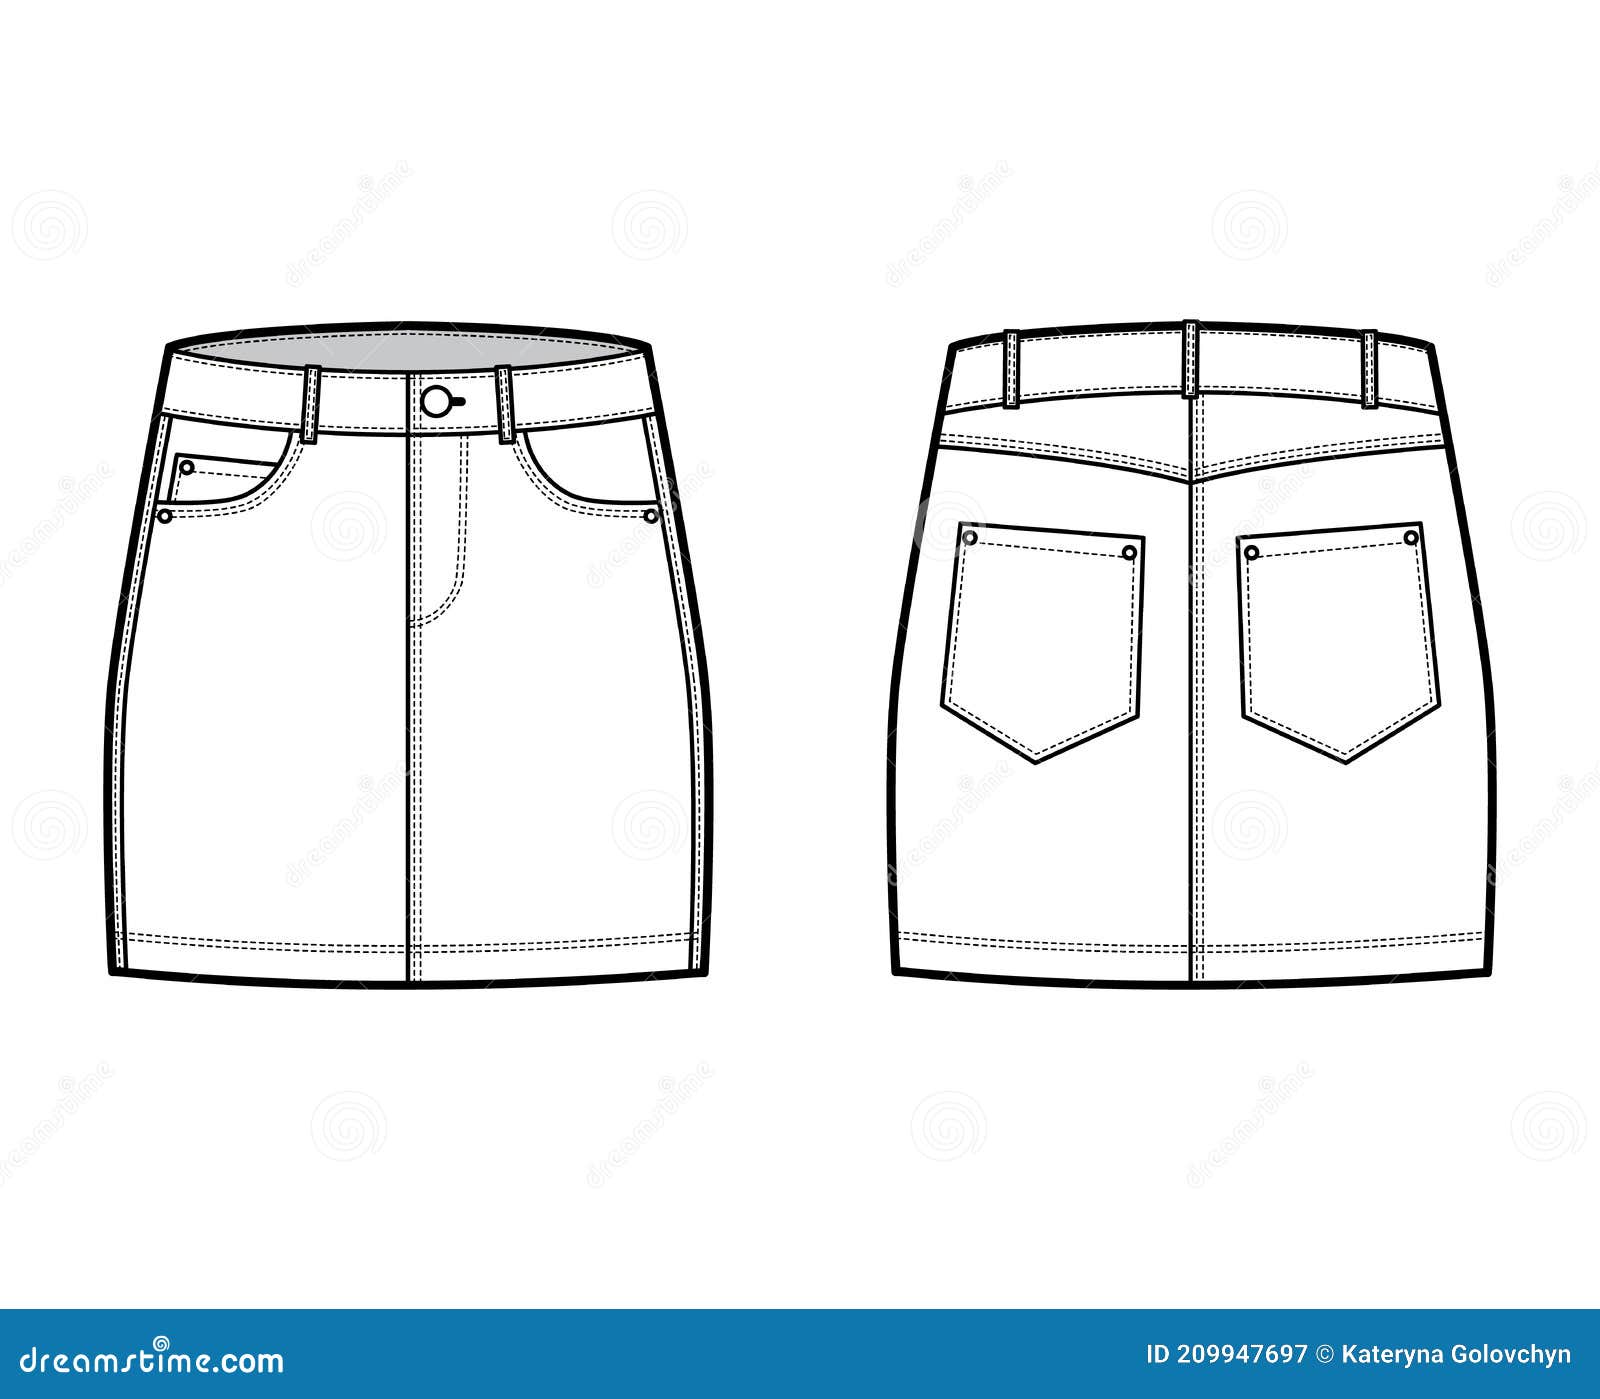 Denim Skirt Technical Fashion Illustration with Mini Length, Low Waist ...